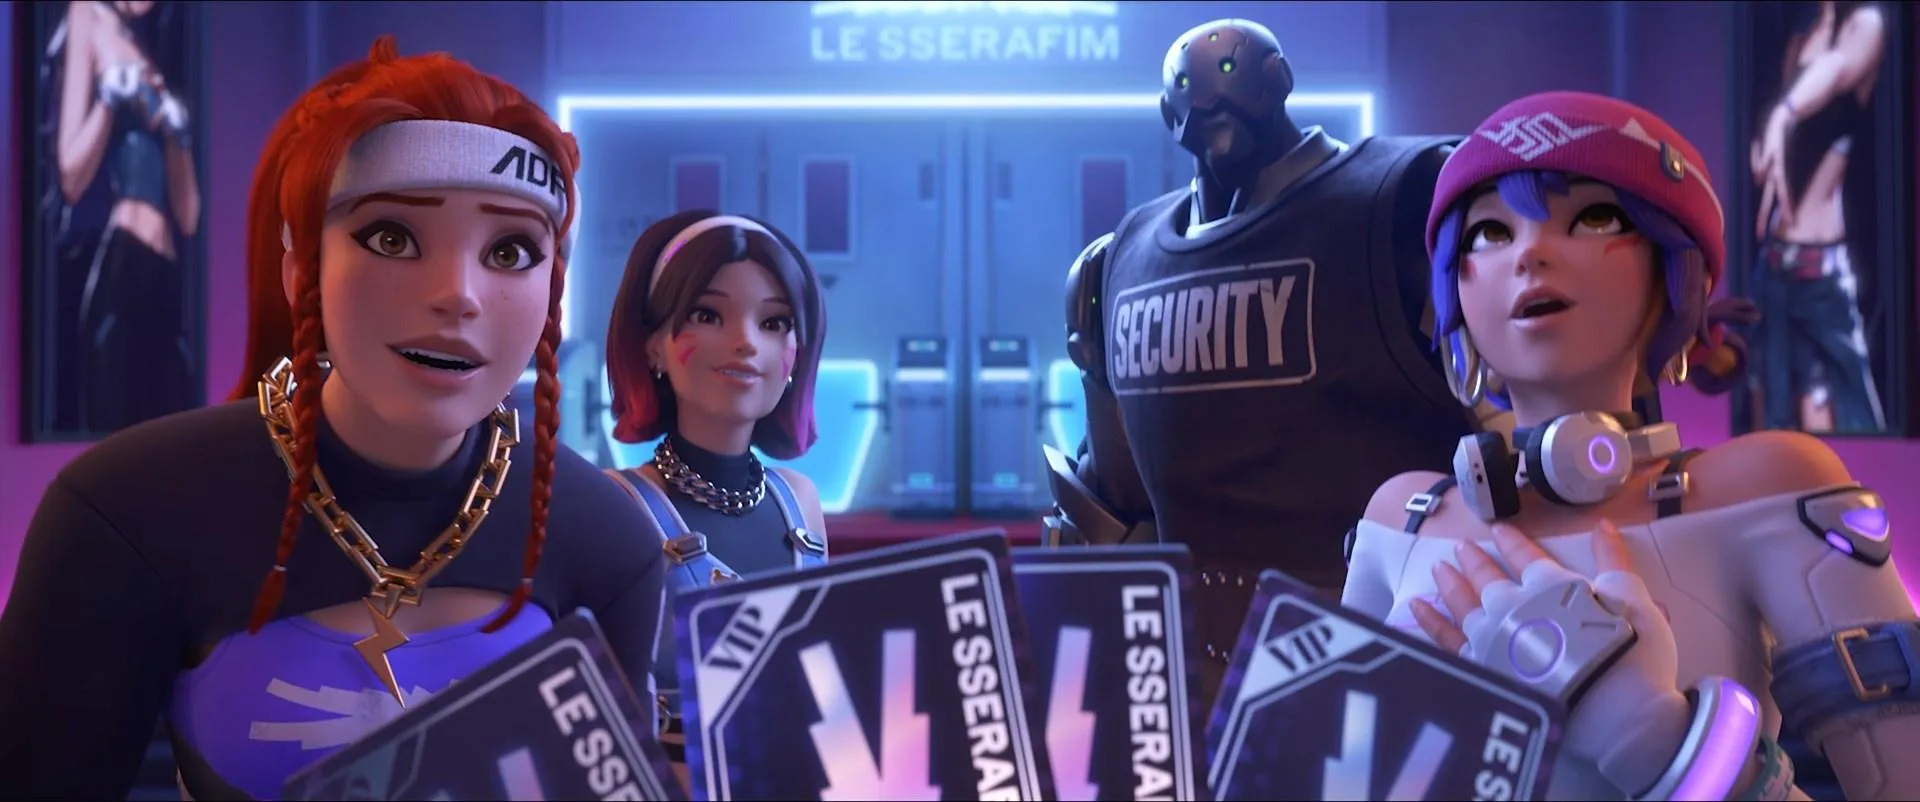 Overwatch 2's K-pop skins revealed in Le Sserafim's new music